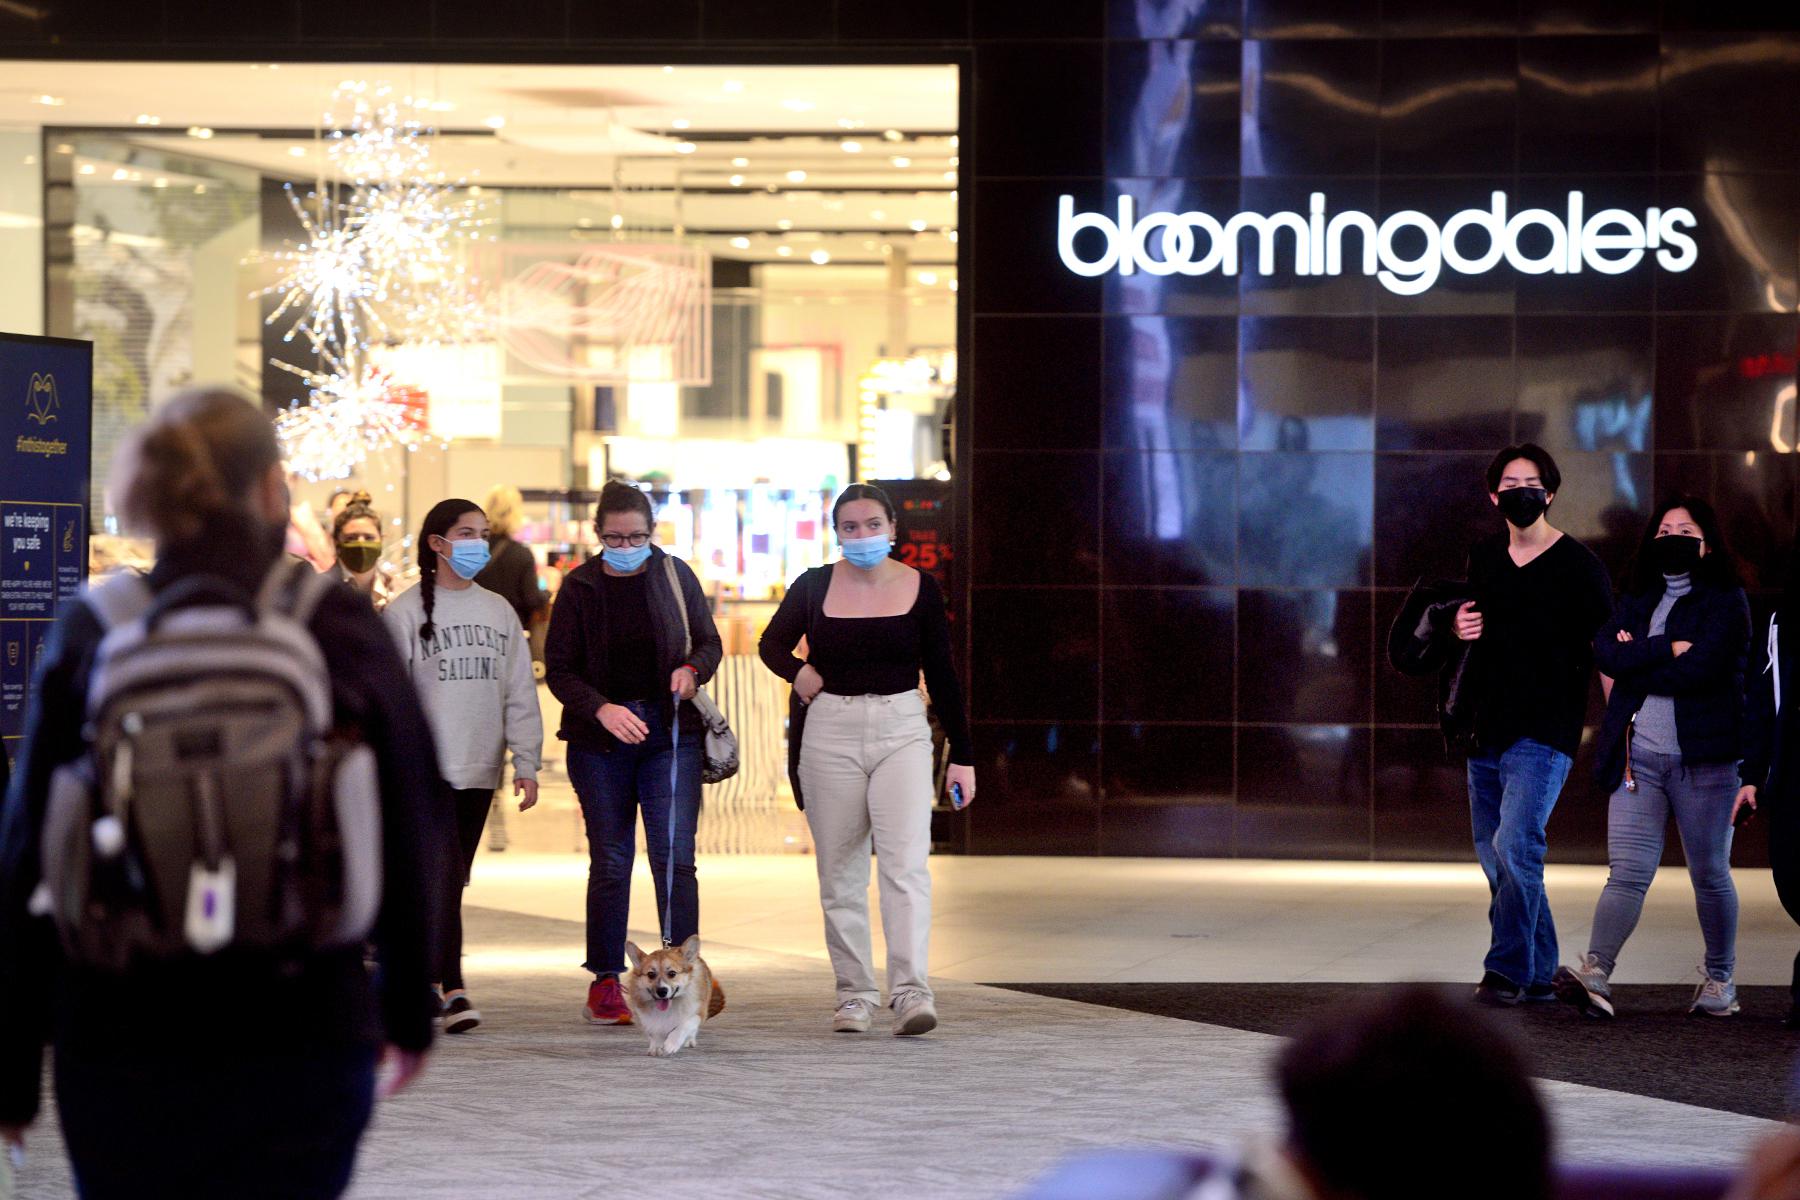 Bloomingdale's to open store in Norwalk, Connecticut